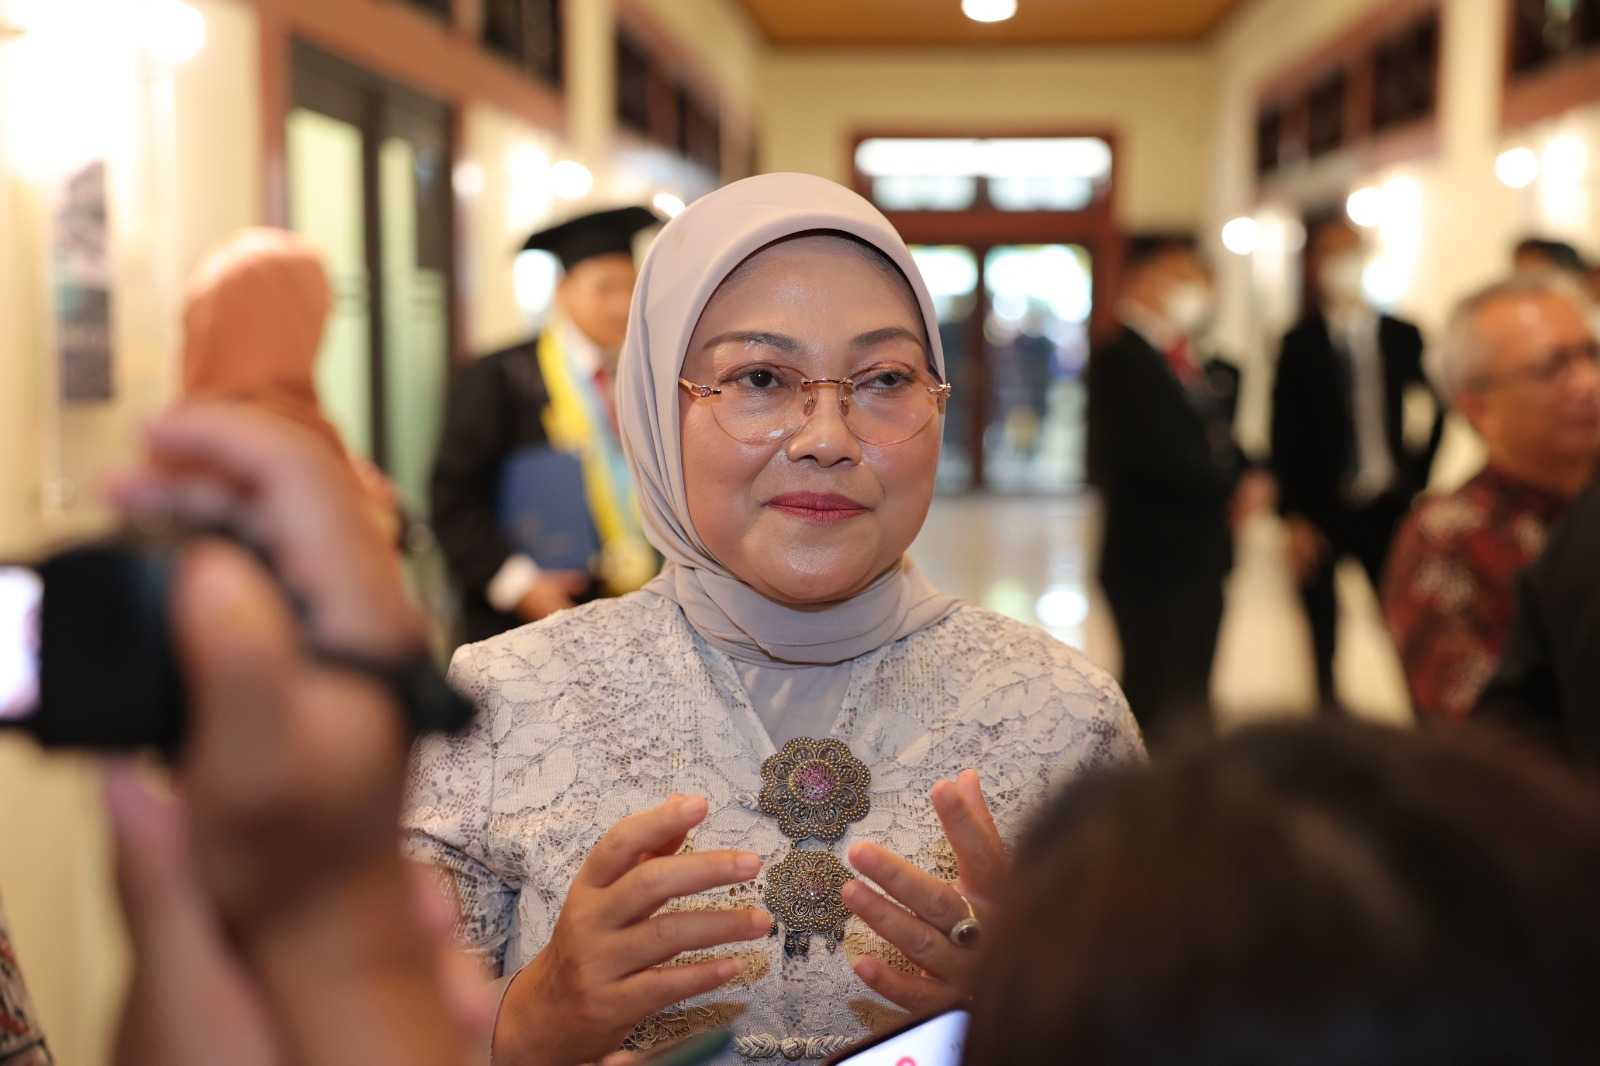 Lulusan Sarjana dan Diploma Duduki 12 Persen Pengangguran di Indonesia, Kata Menaker